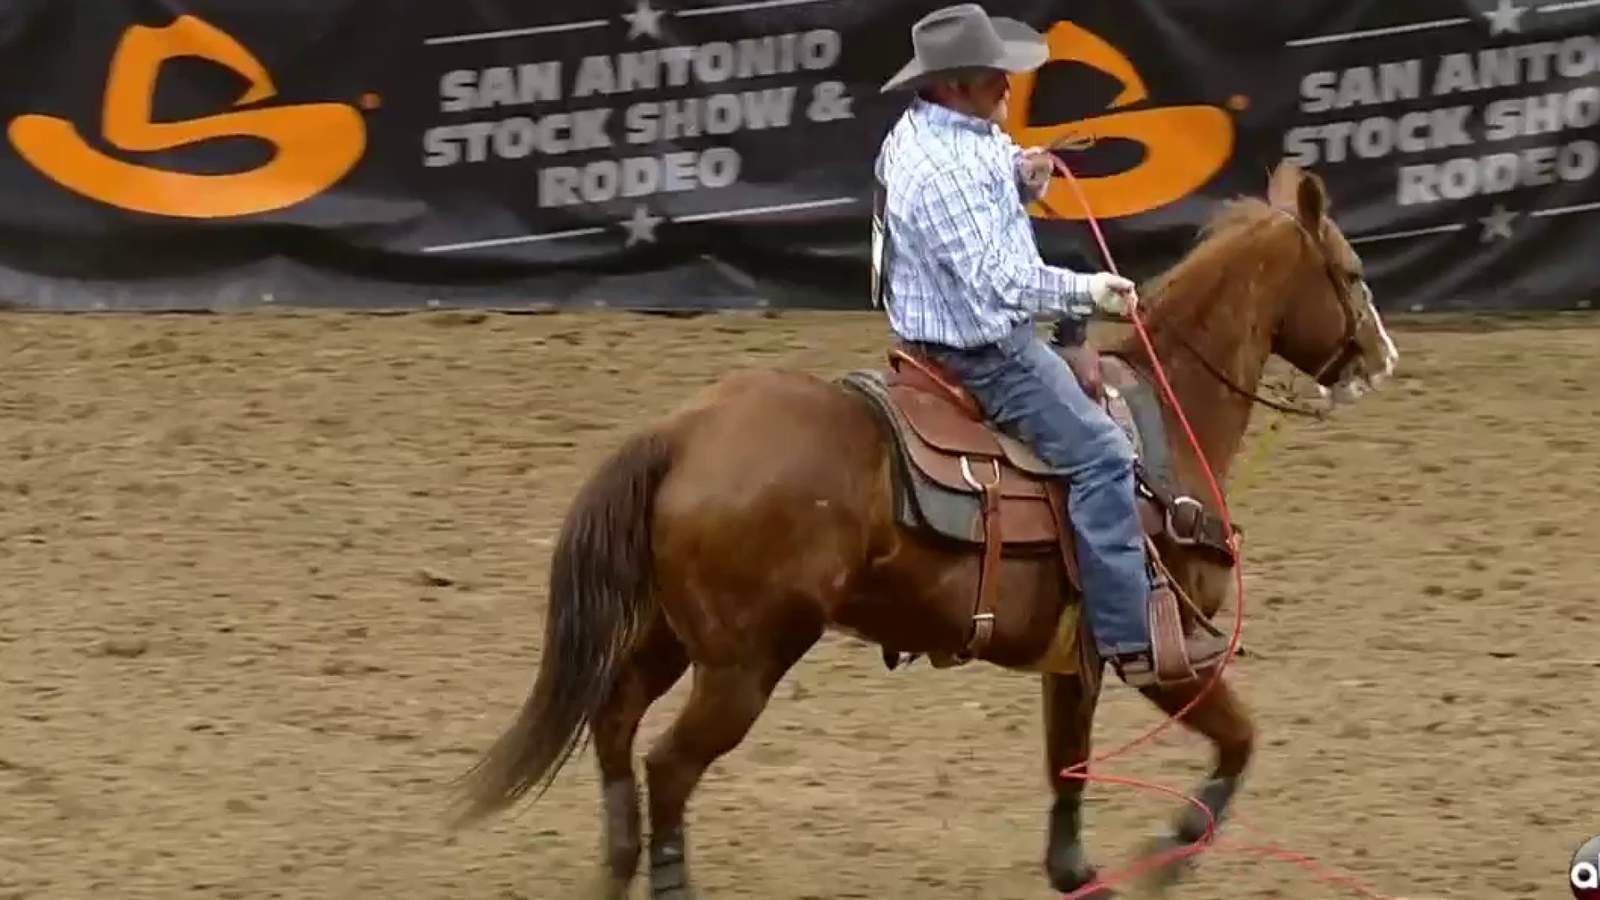 The rodeo is a really exciting event. Родео в Сан Антонио. Родео Сан андреас.